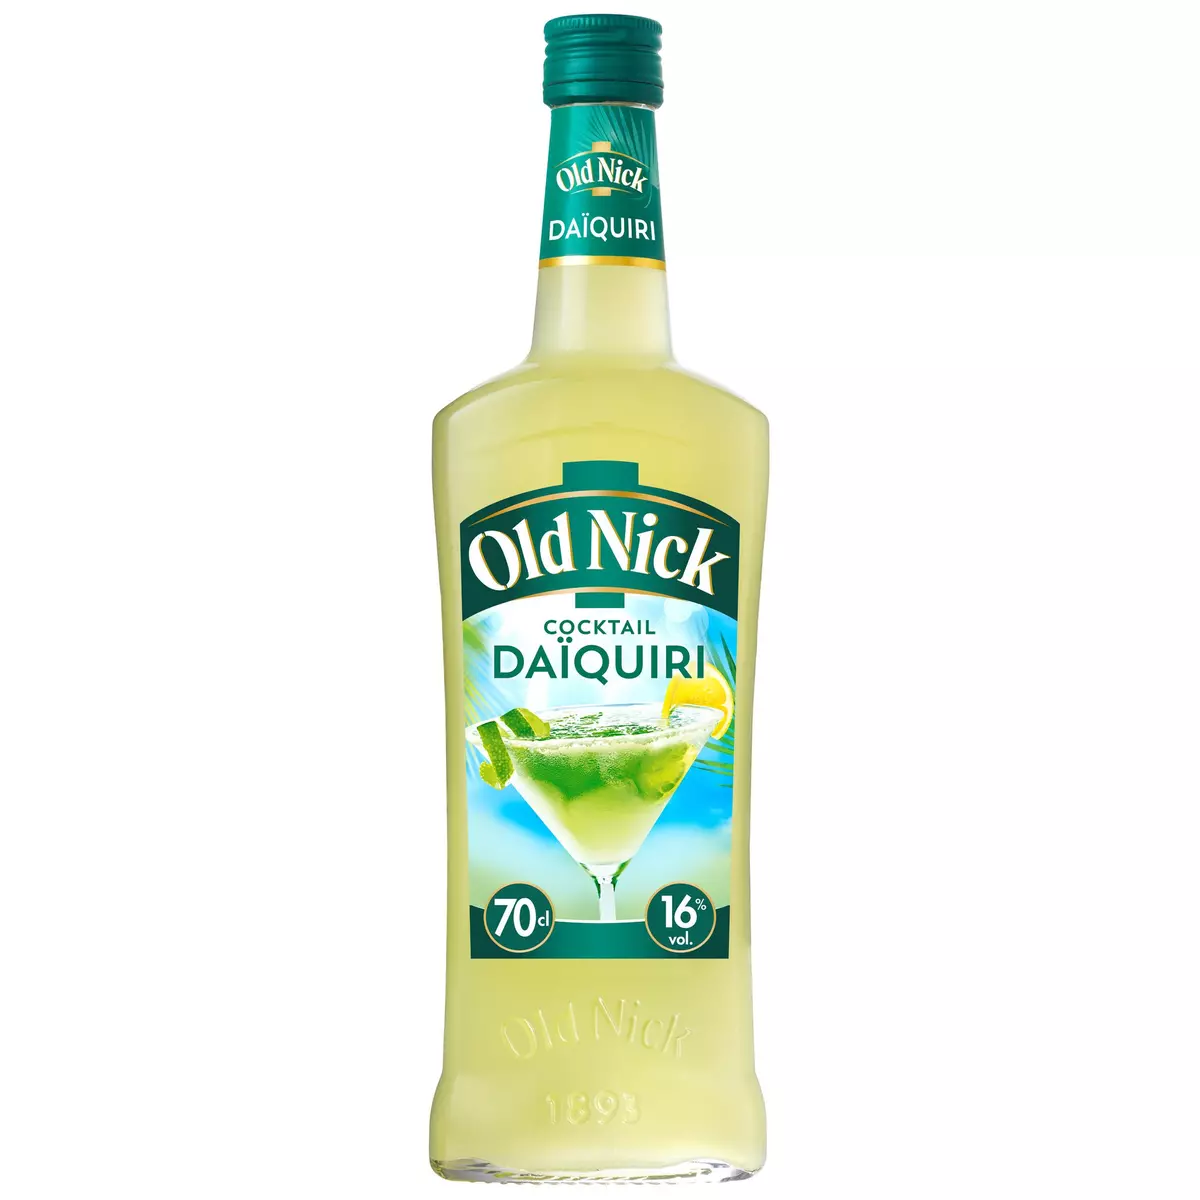 OLD NICK Cocktail Daiquiri à base de rhum 16% 70cl